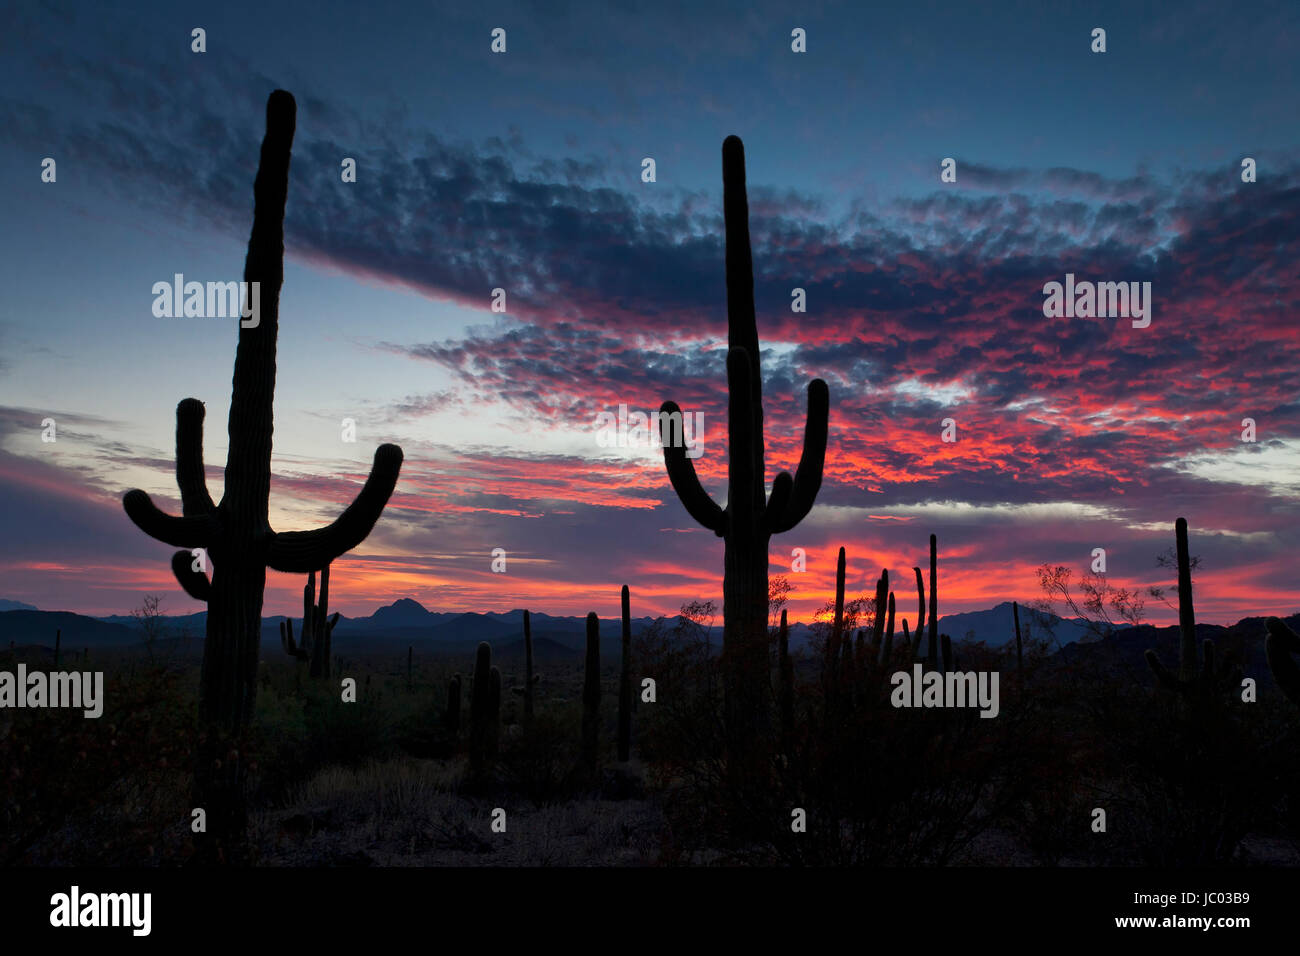 Saguaro cactus (Carnegiea gigantea) silhouette against sunset (desert landscape) - Arizona USA Stock Photo